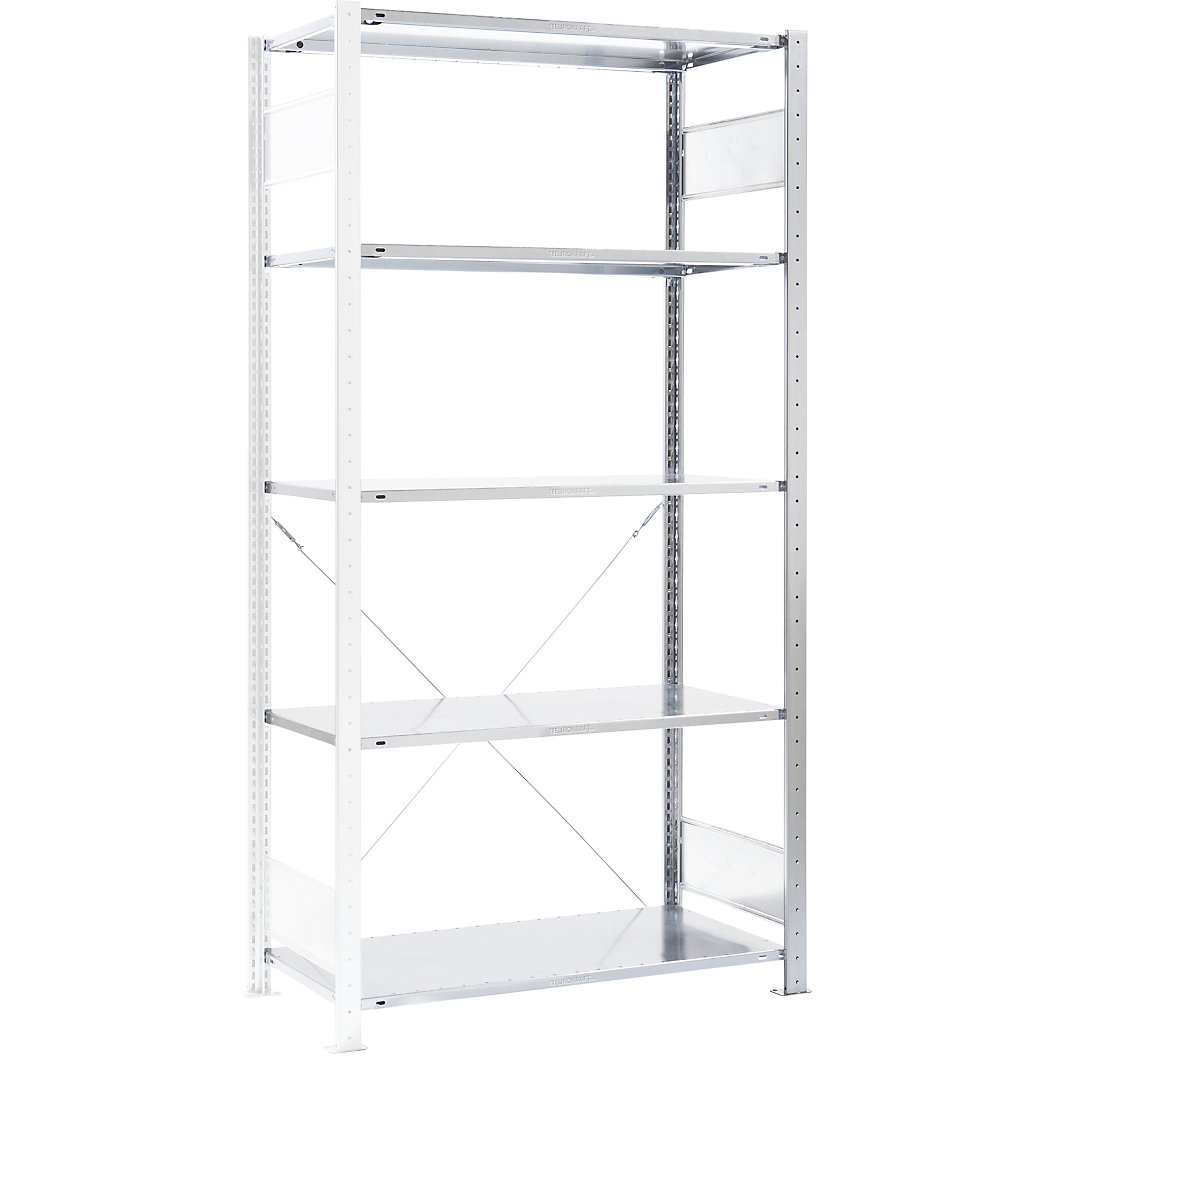 Boltless shelving unit – eurokraft pro, height 2000 mm, for open fronted storage bins, extension shelf unit, WxD 1006 x 336 mm, 5 shelves-8